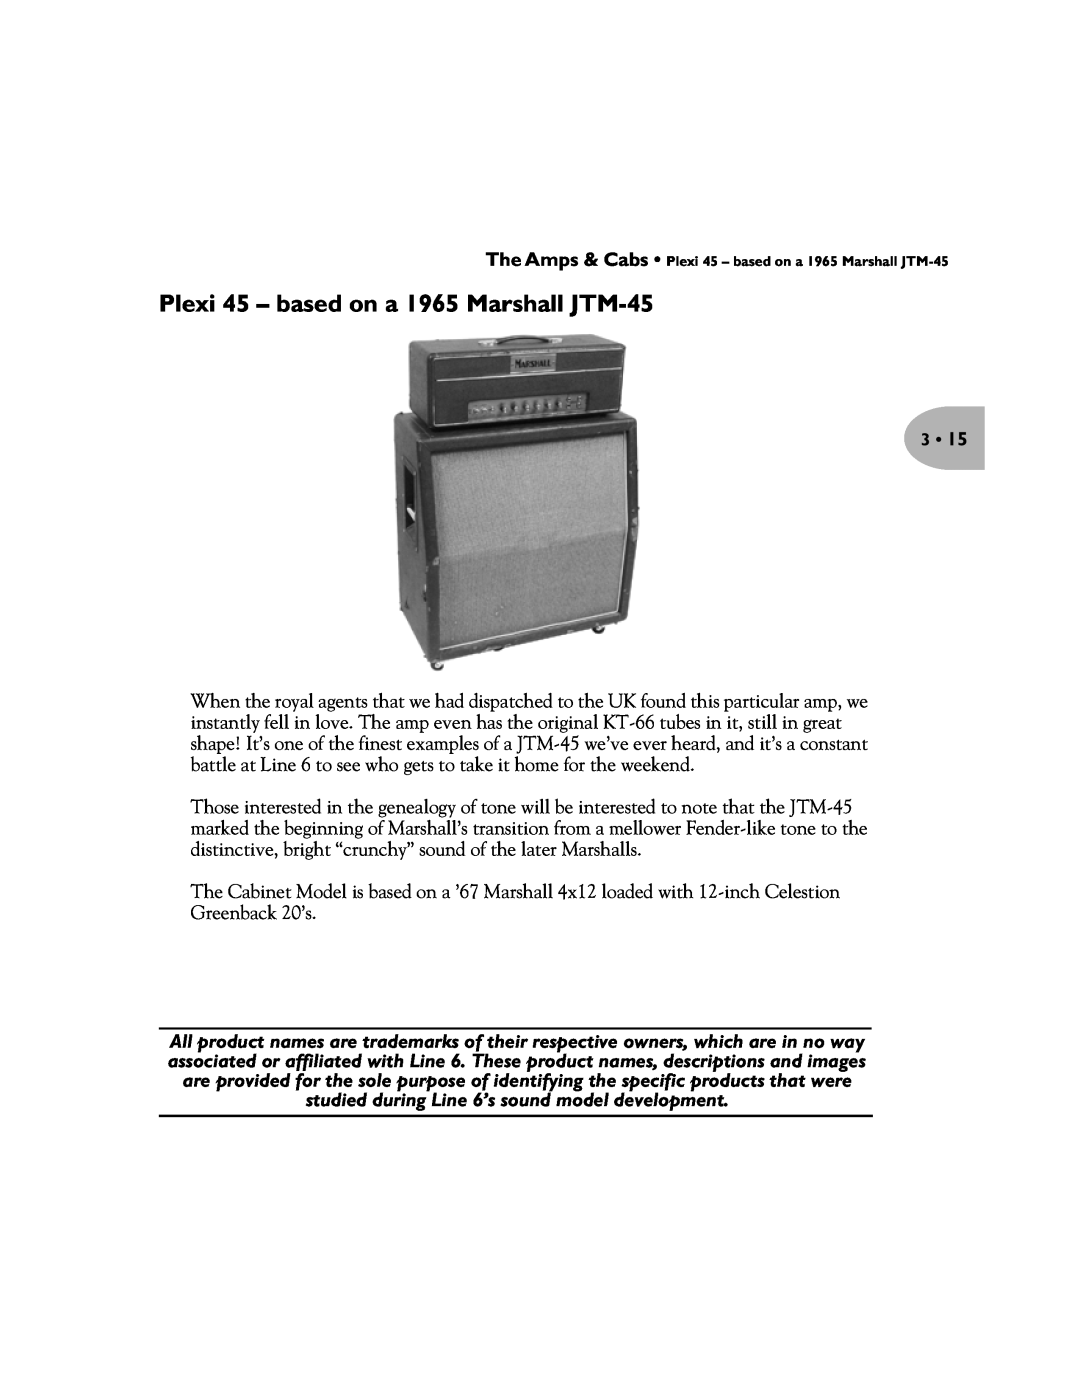 Line 6 Pilot's Handbook manual Plexi 45 - based on a 1965 Marshall JTM-45 